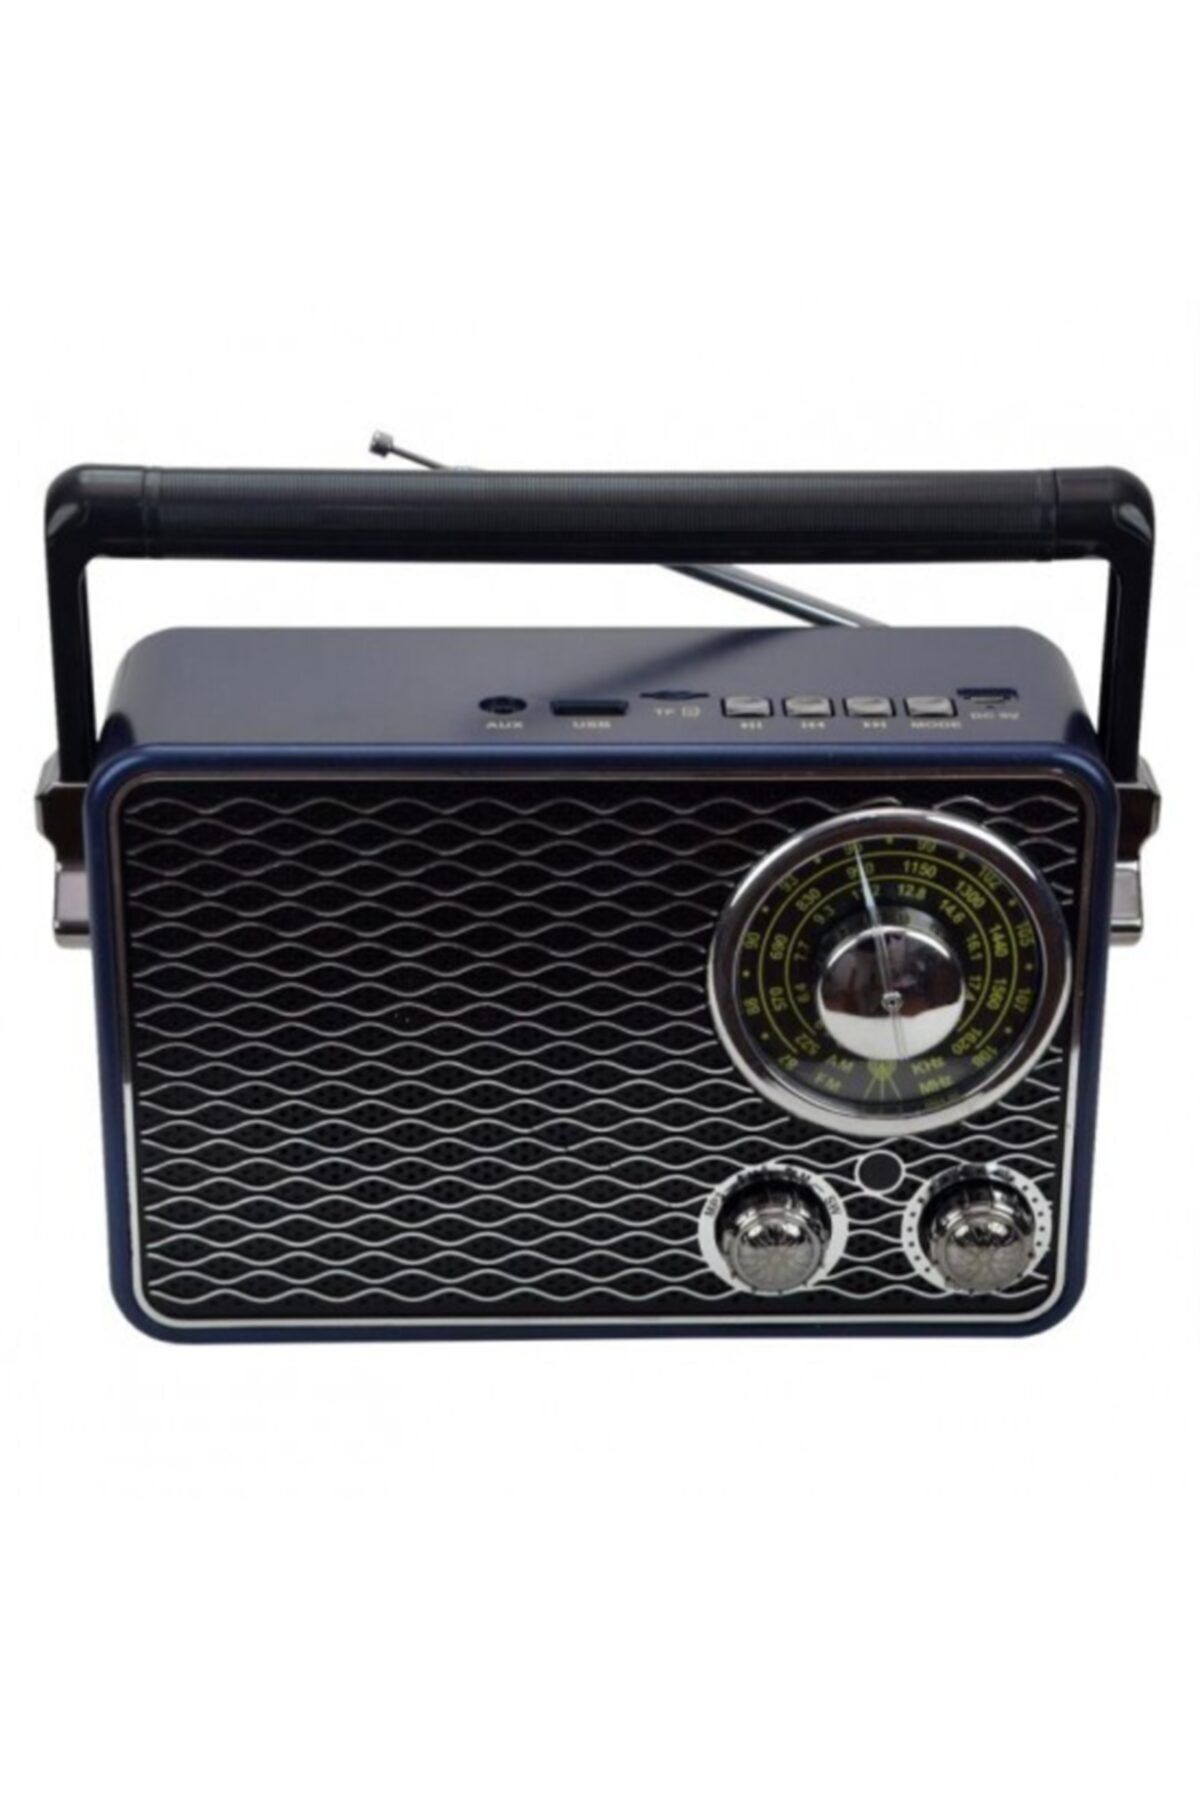 SIGHTZER Kemai Md1177 Nostaljik Radyo Şarjlı Bluetooh Hoparlör Retro Speaker